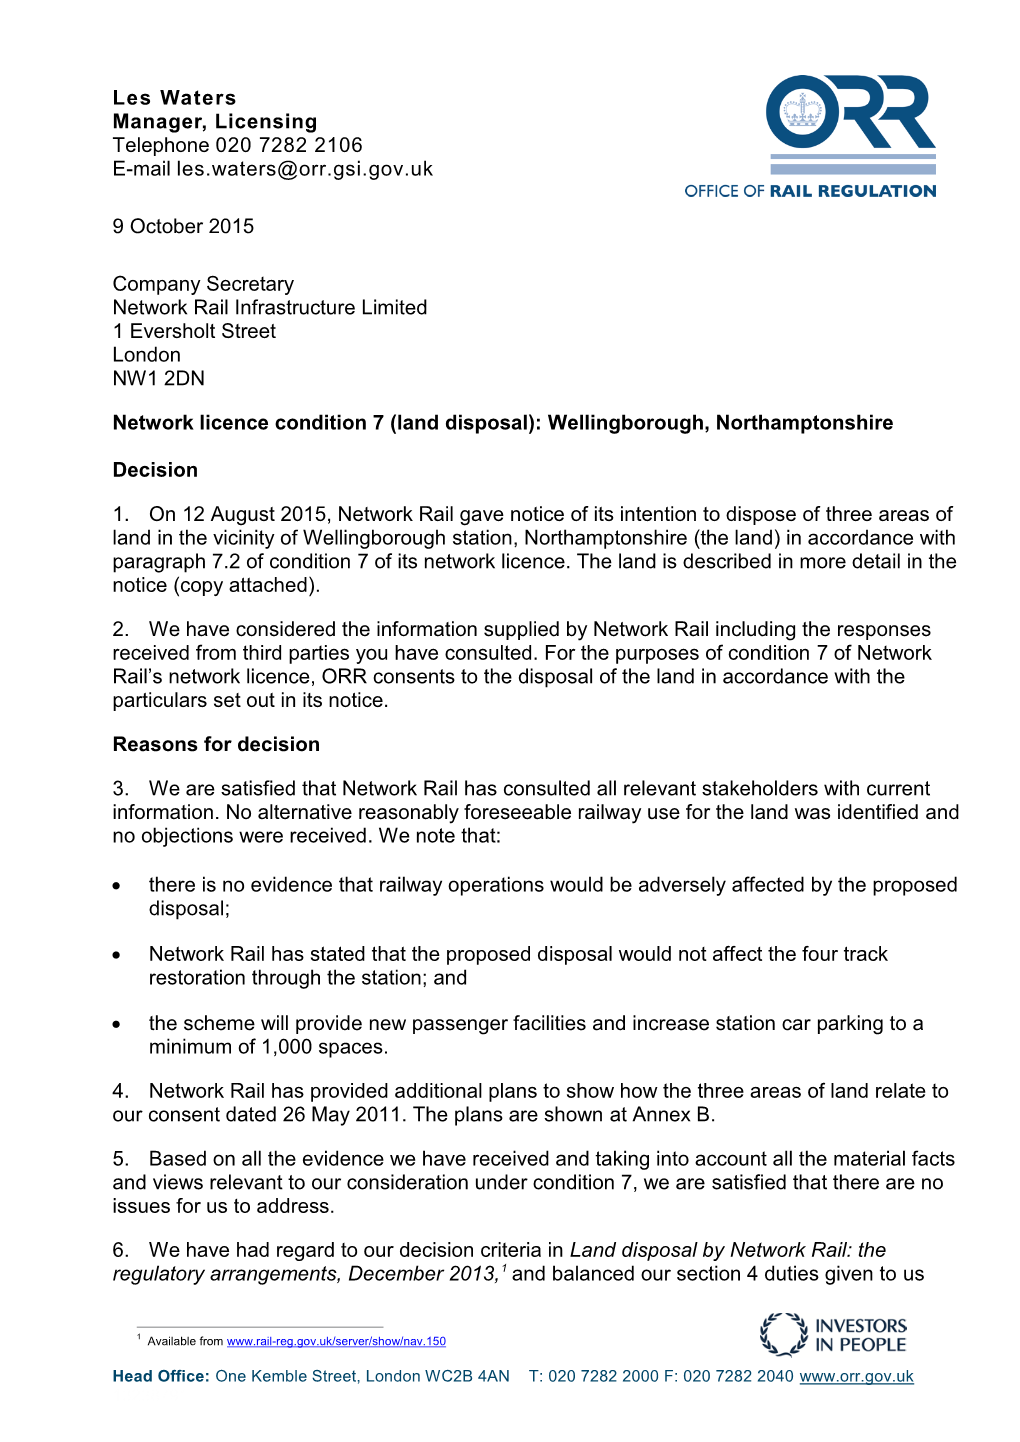 Land Disposal Notice for Wellingborough